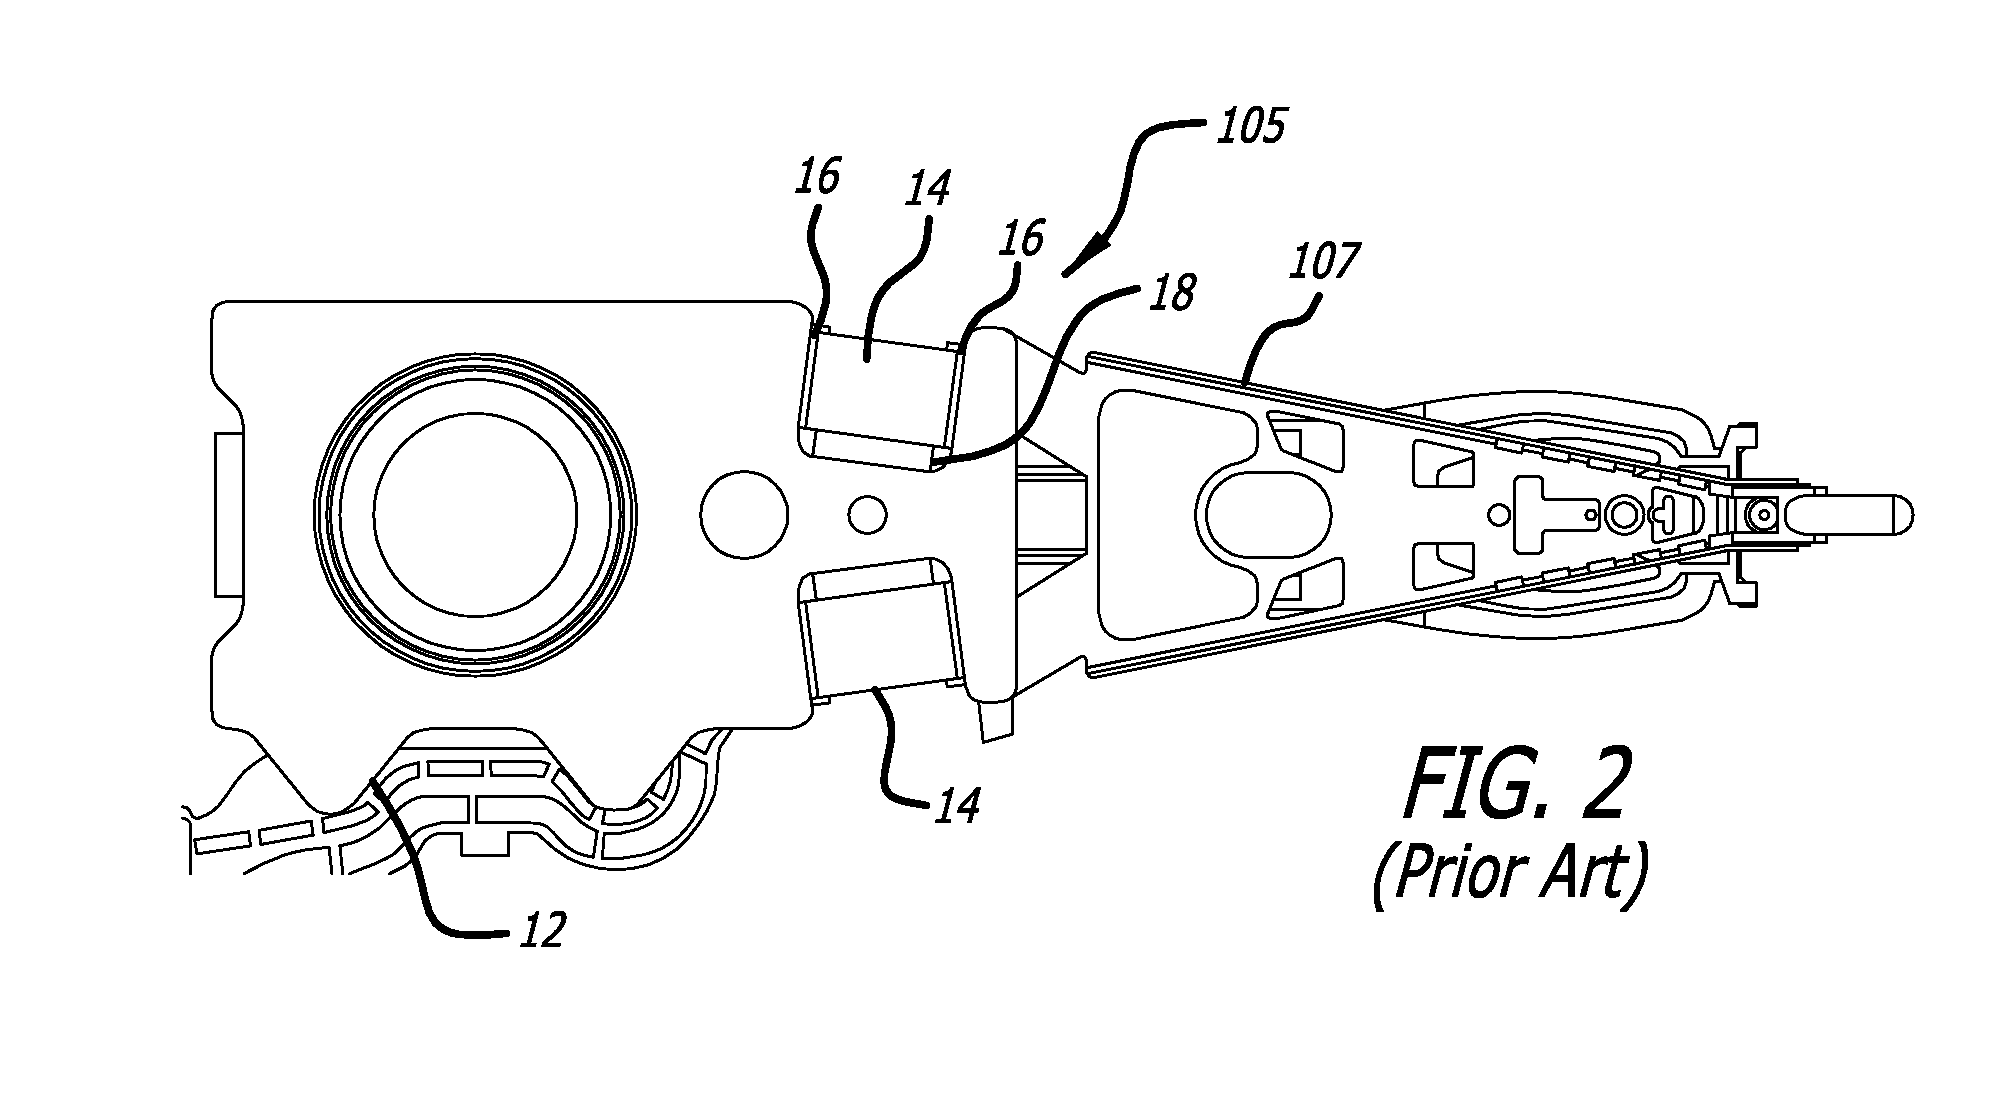 DSA suspension with microactuators extending to gimbal through flexible connectors